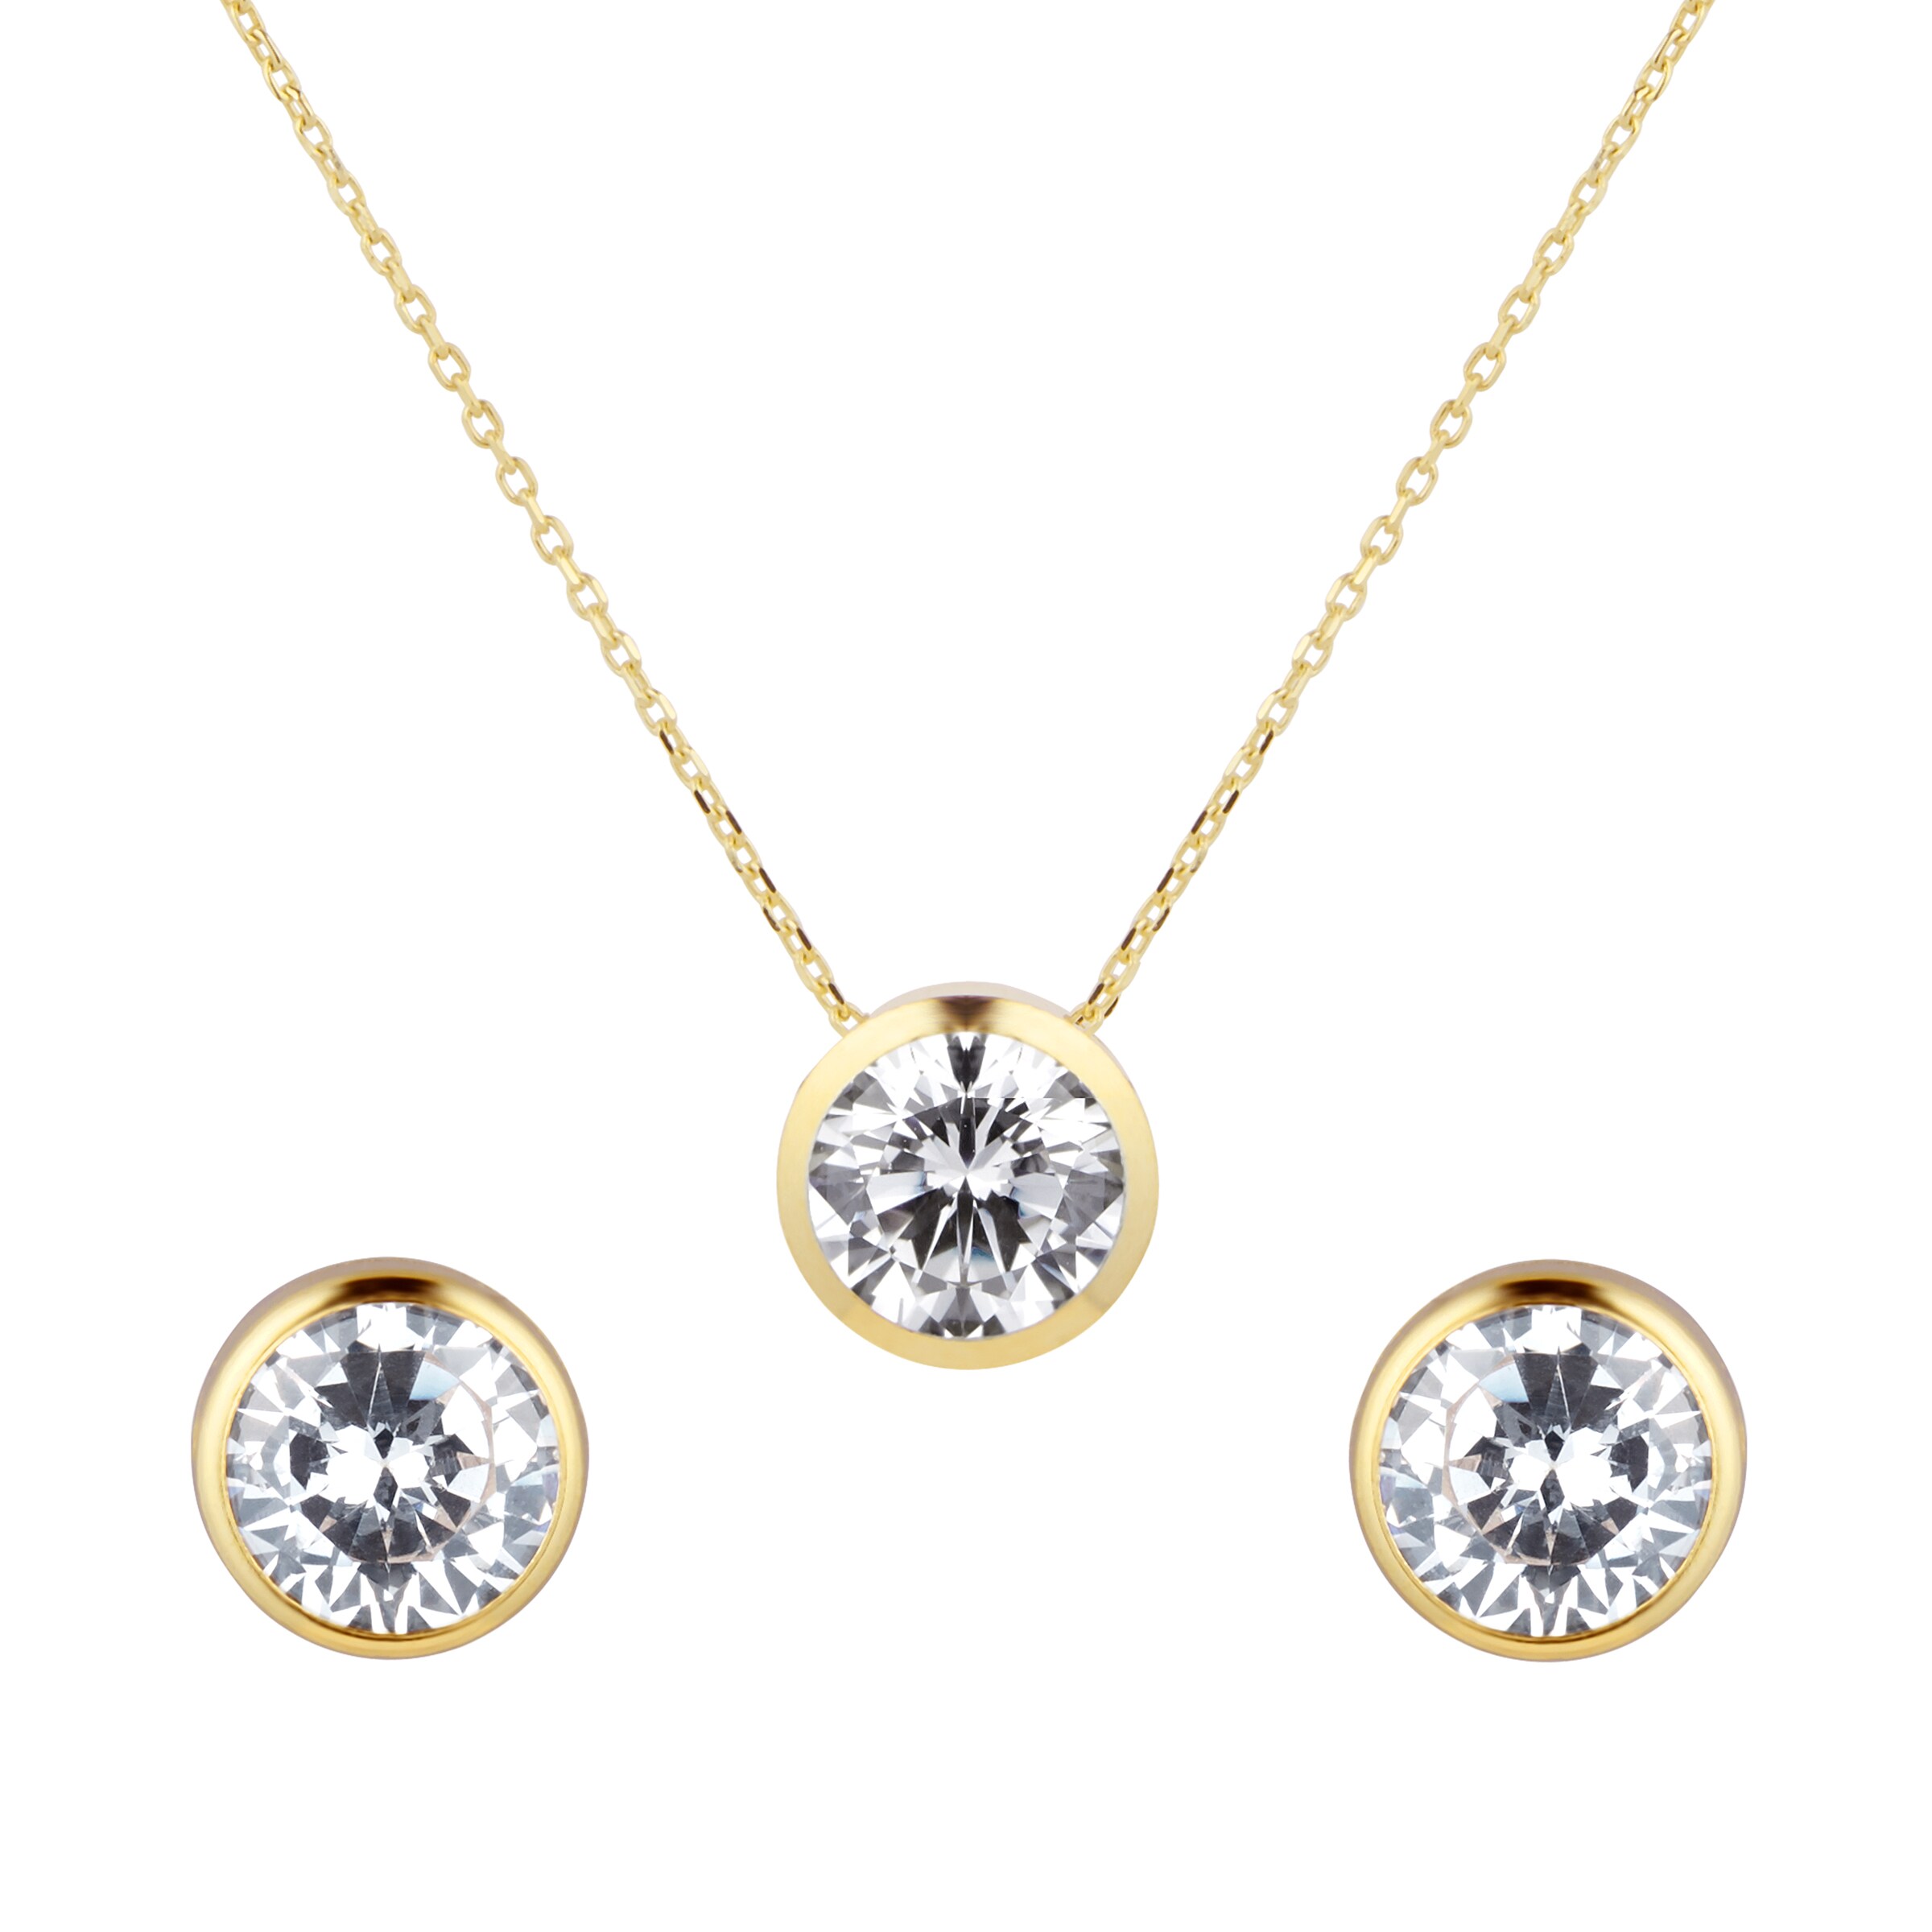 All Jewellery – Goldsmiths' Shop Talent